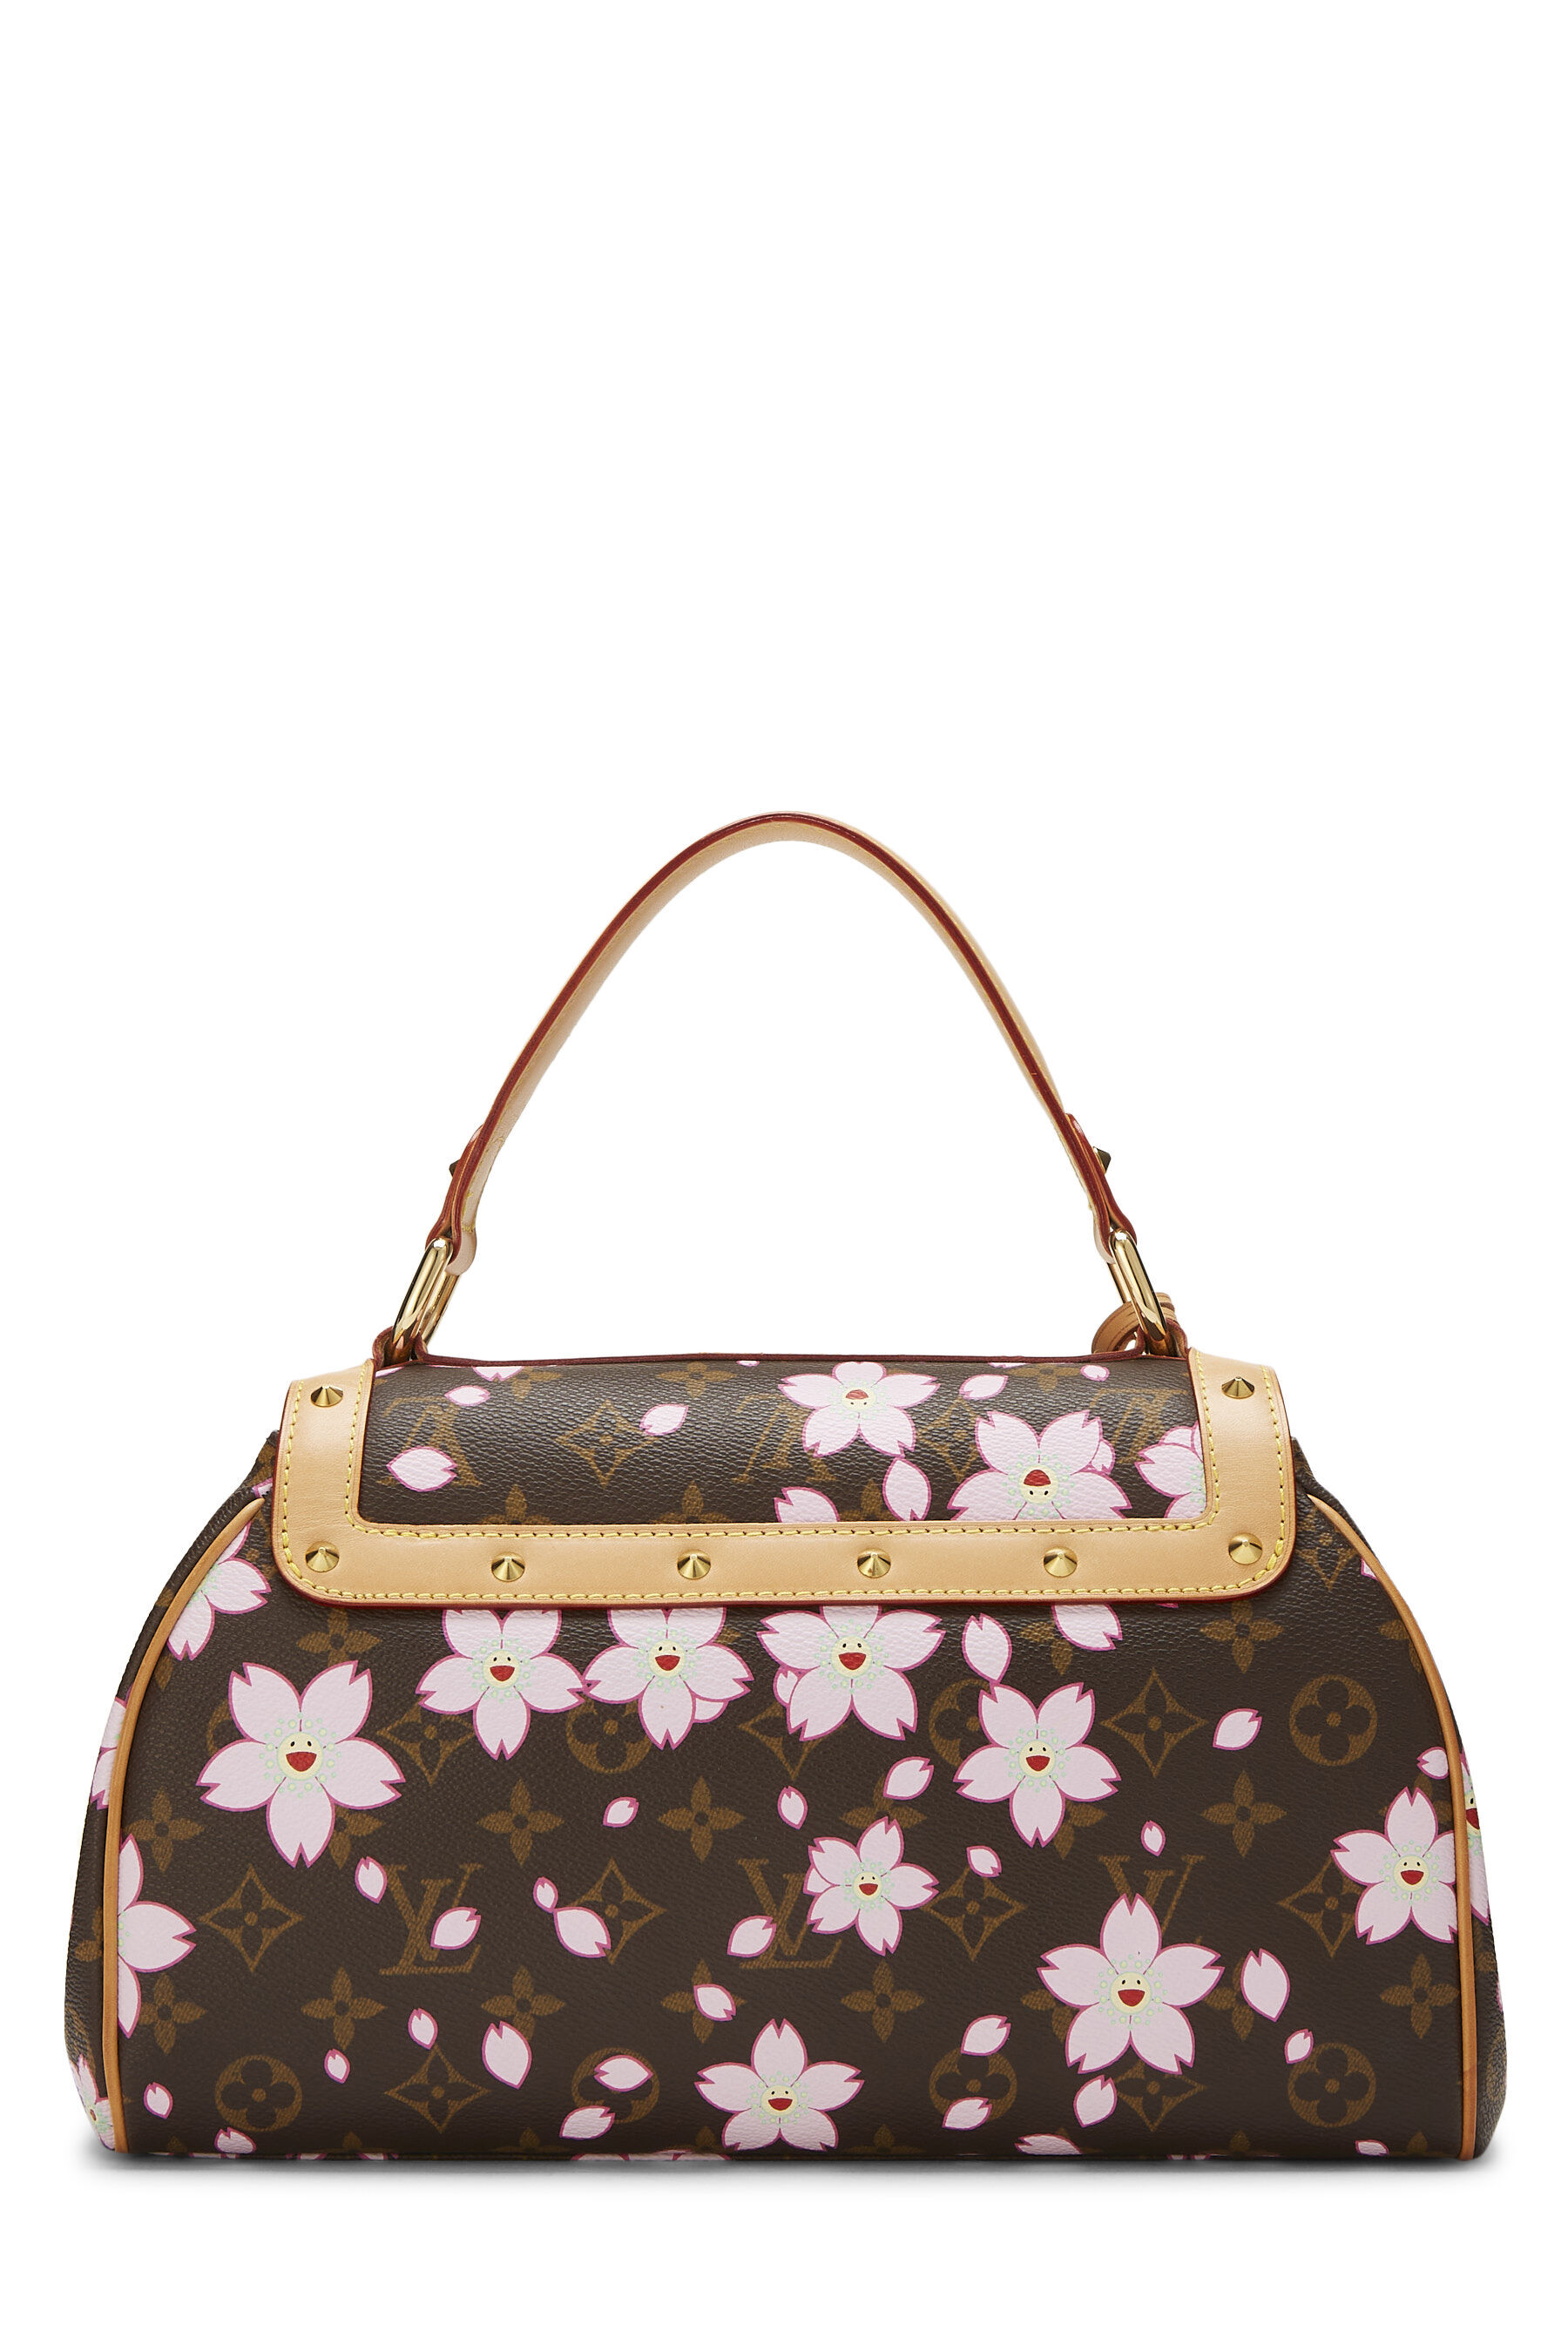 Louis Vuitton Takashi Murakami Limited Edition Retro Cherry Blossom Purse |  Luxeleah Bags